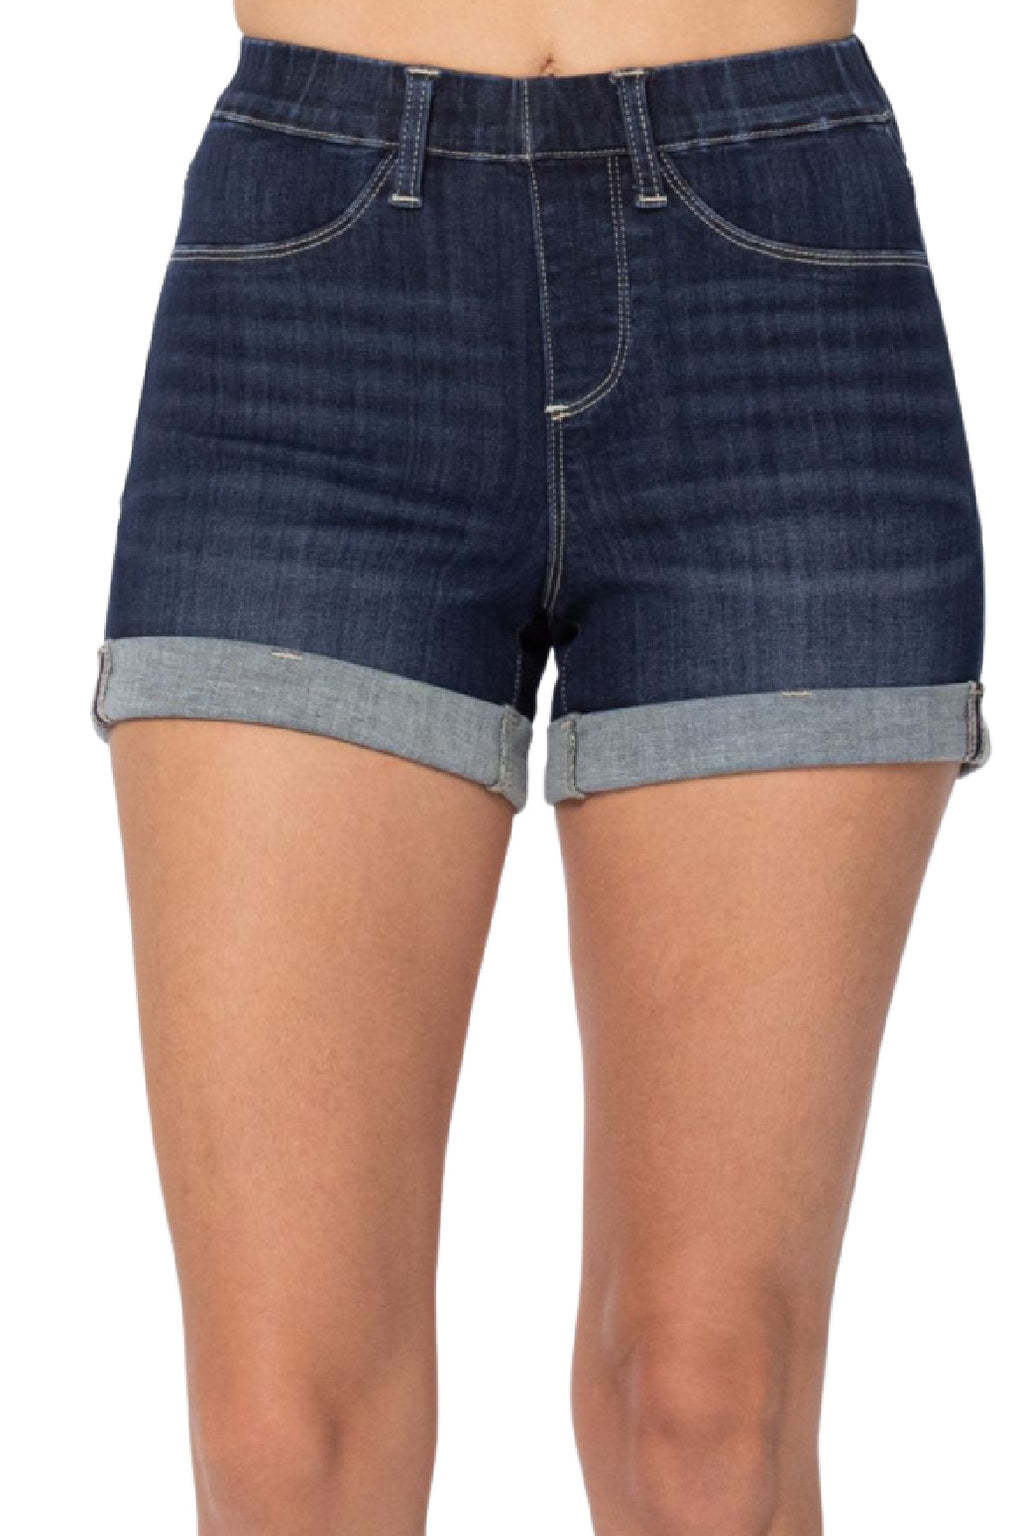 Judy Blue Pull-On High Waist Shorts Style 150139